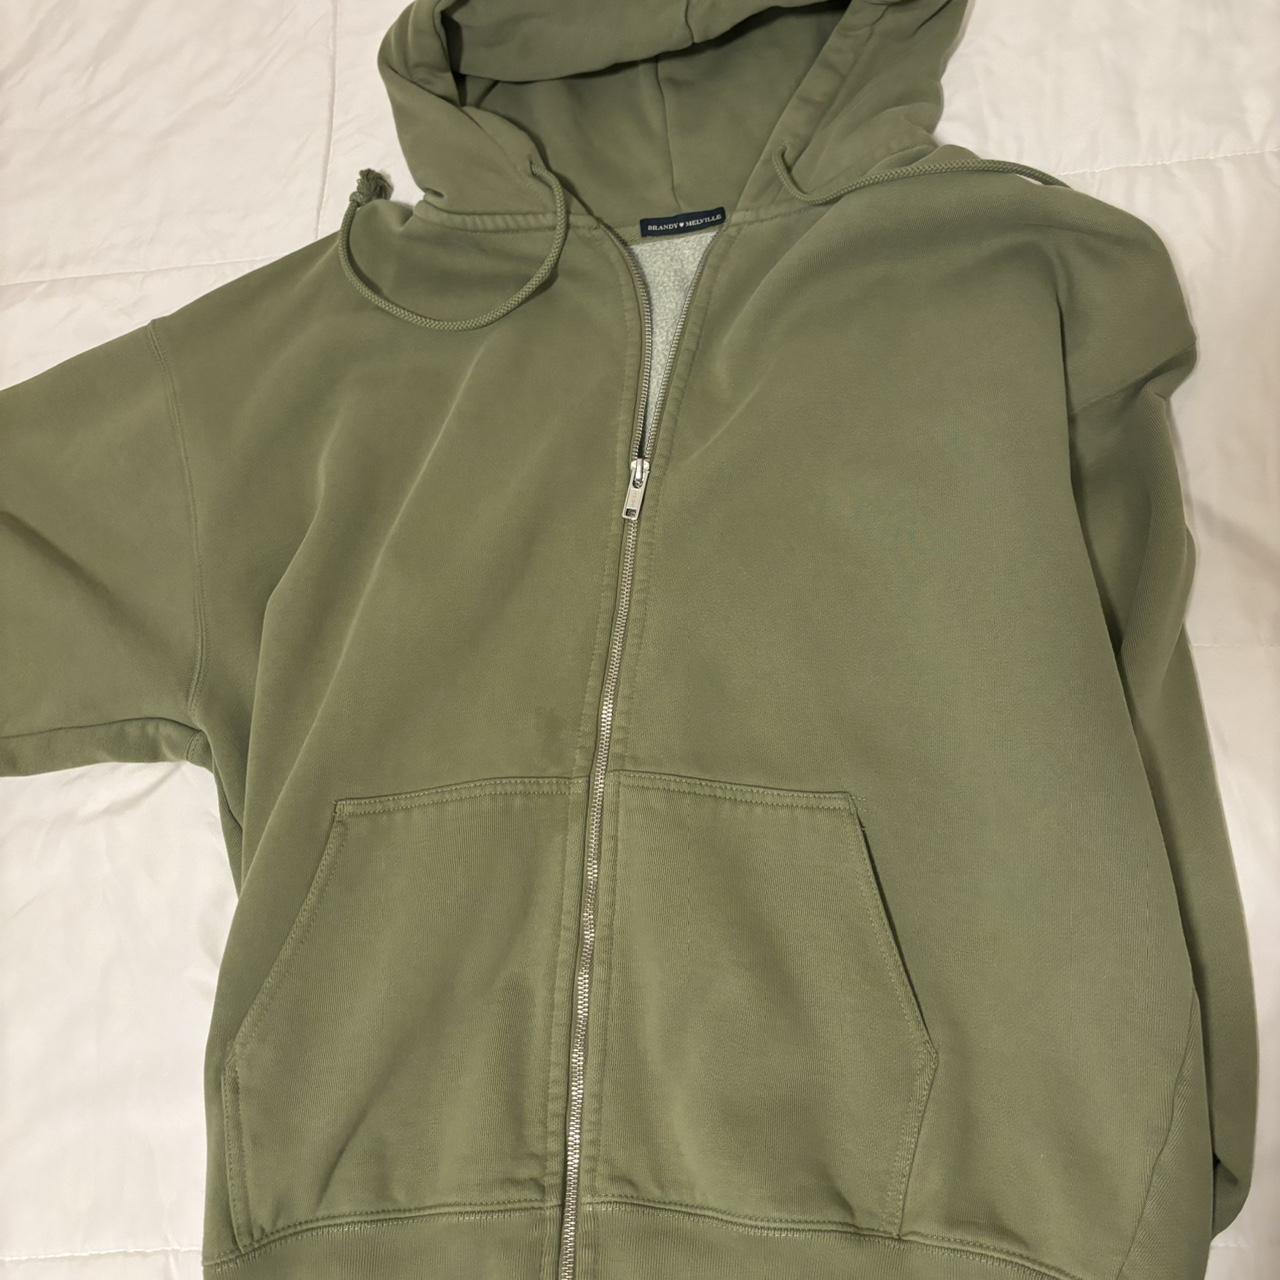 Brandy Melville green christy zip up hoodie - $38 - From alyssa